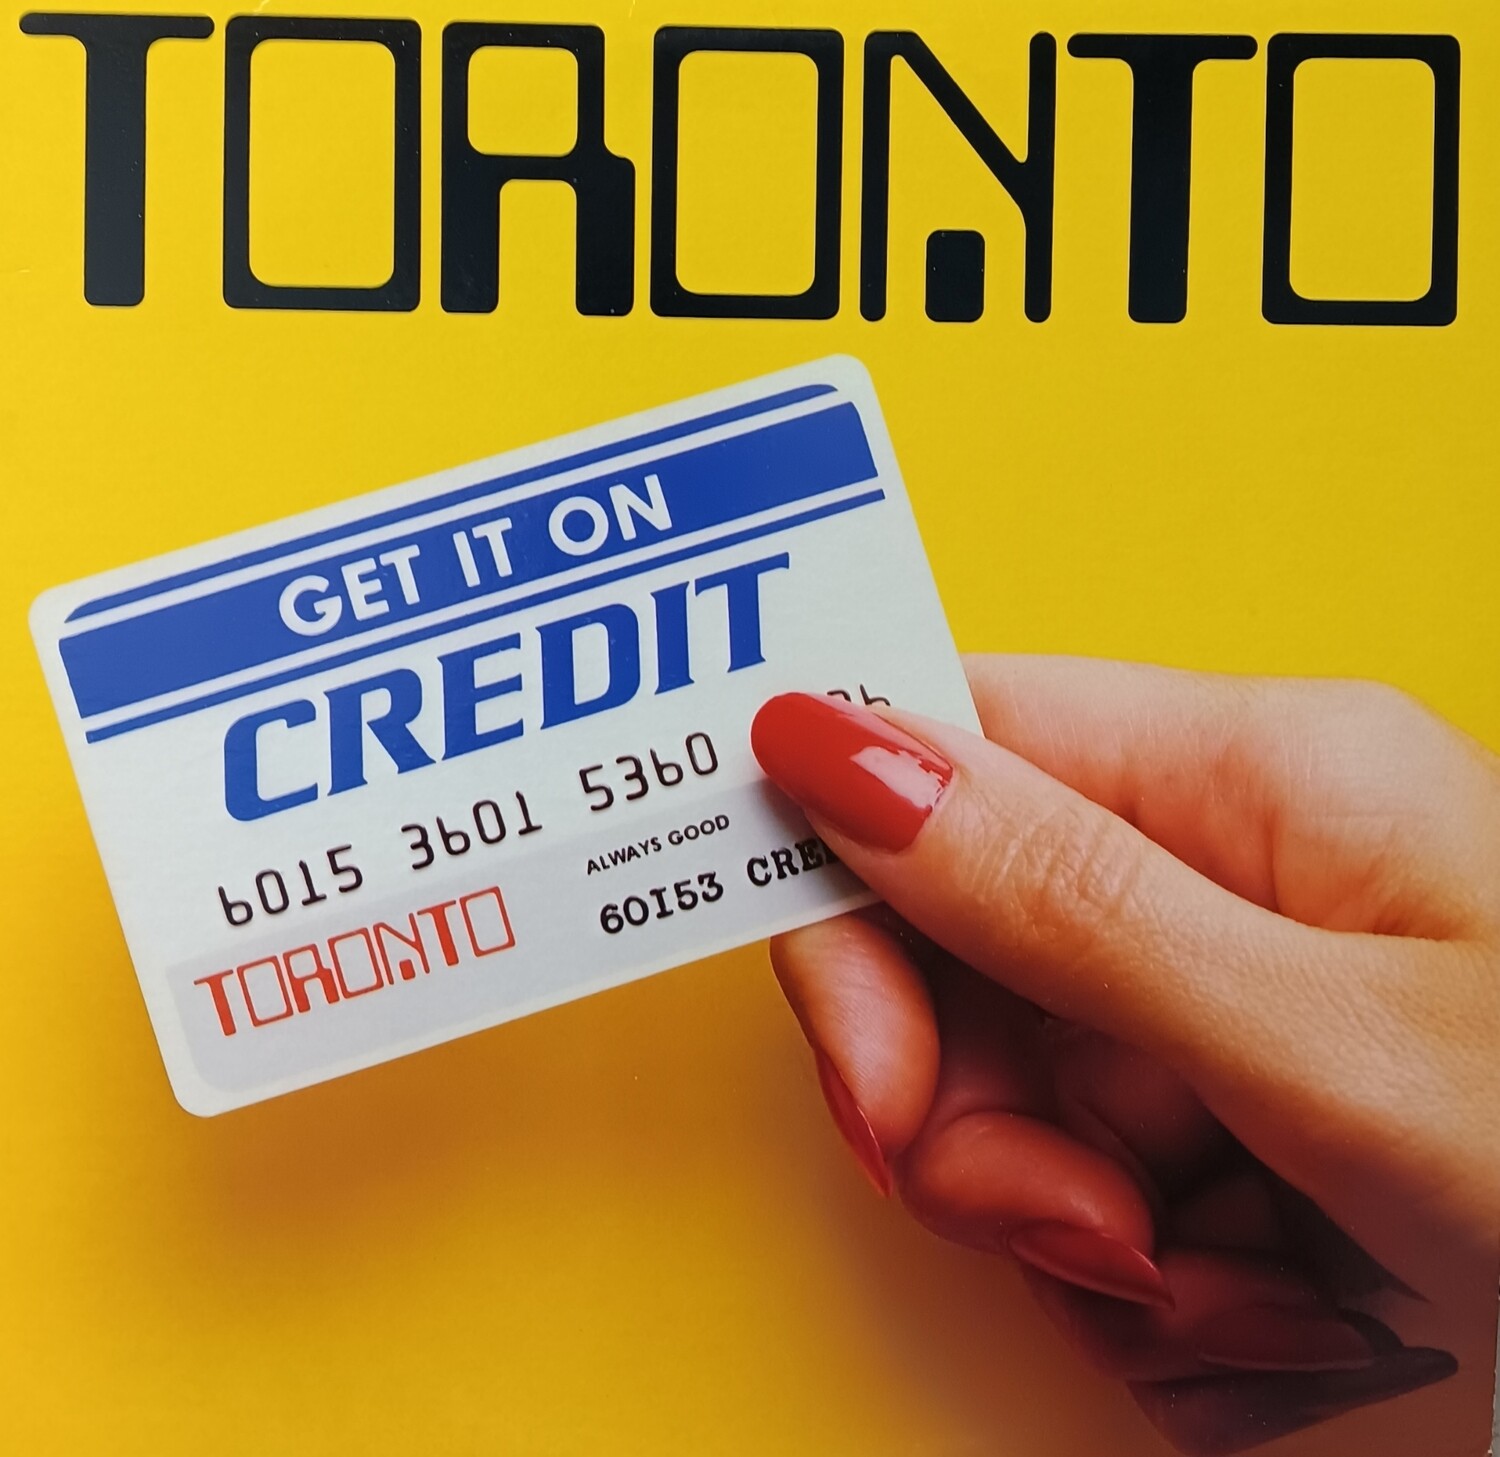 Toronto - Get it on credit